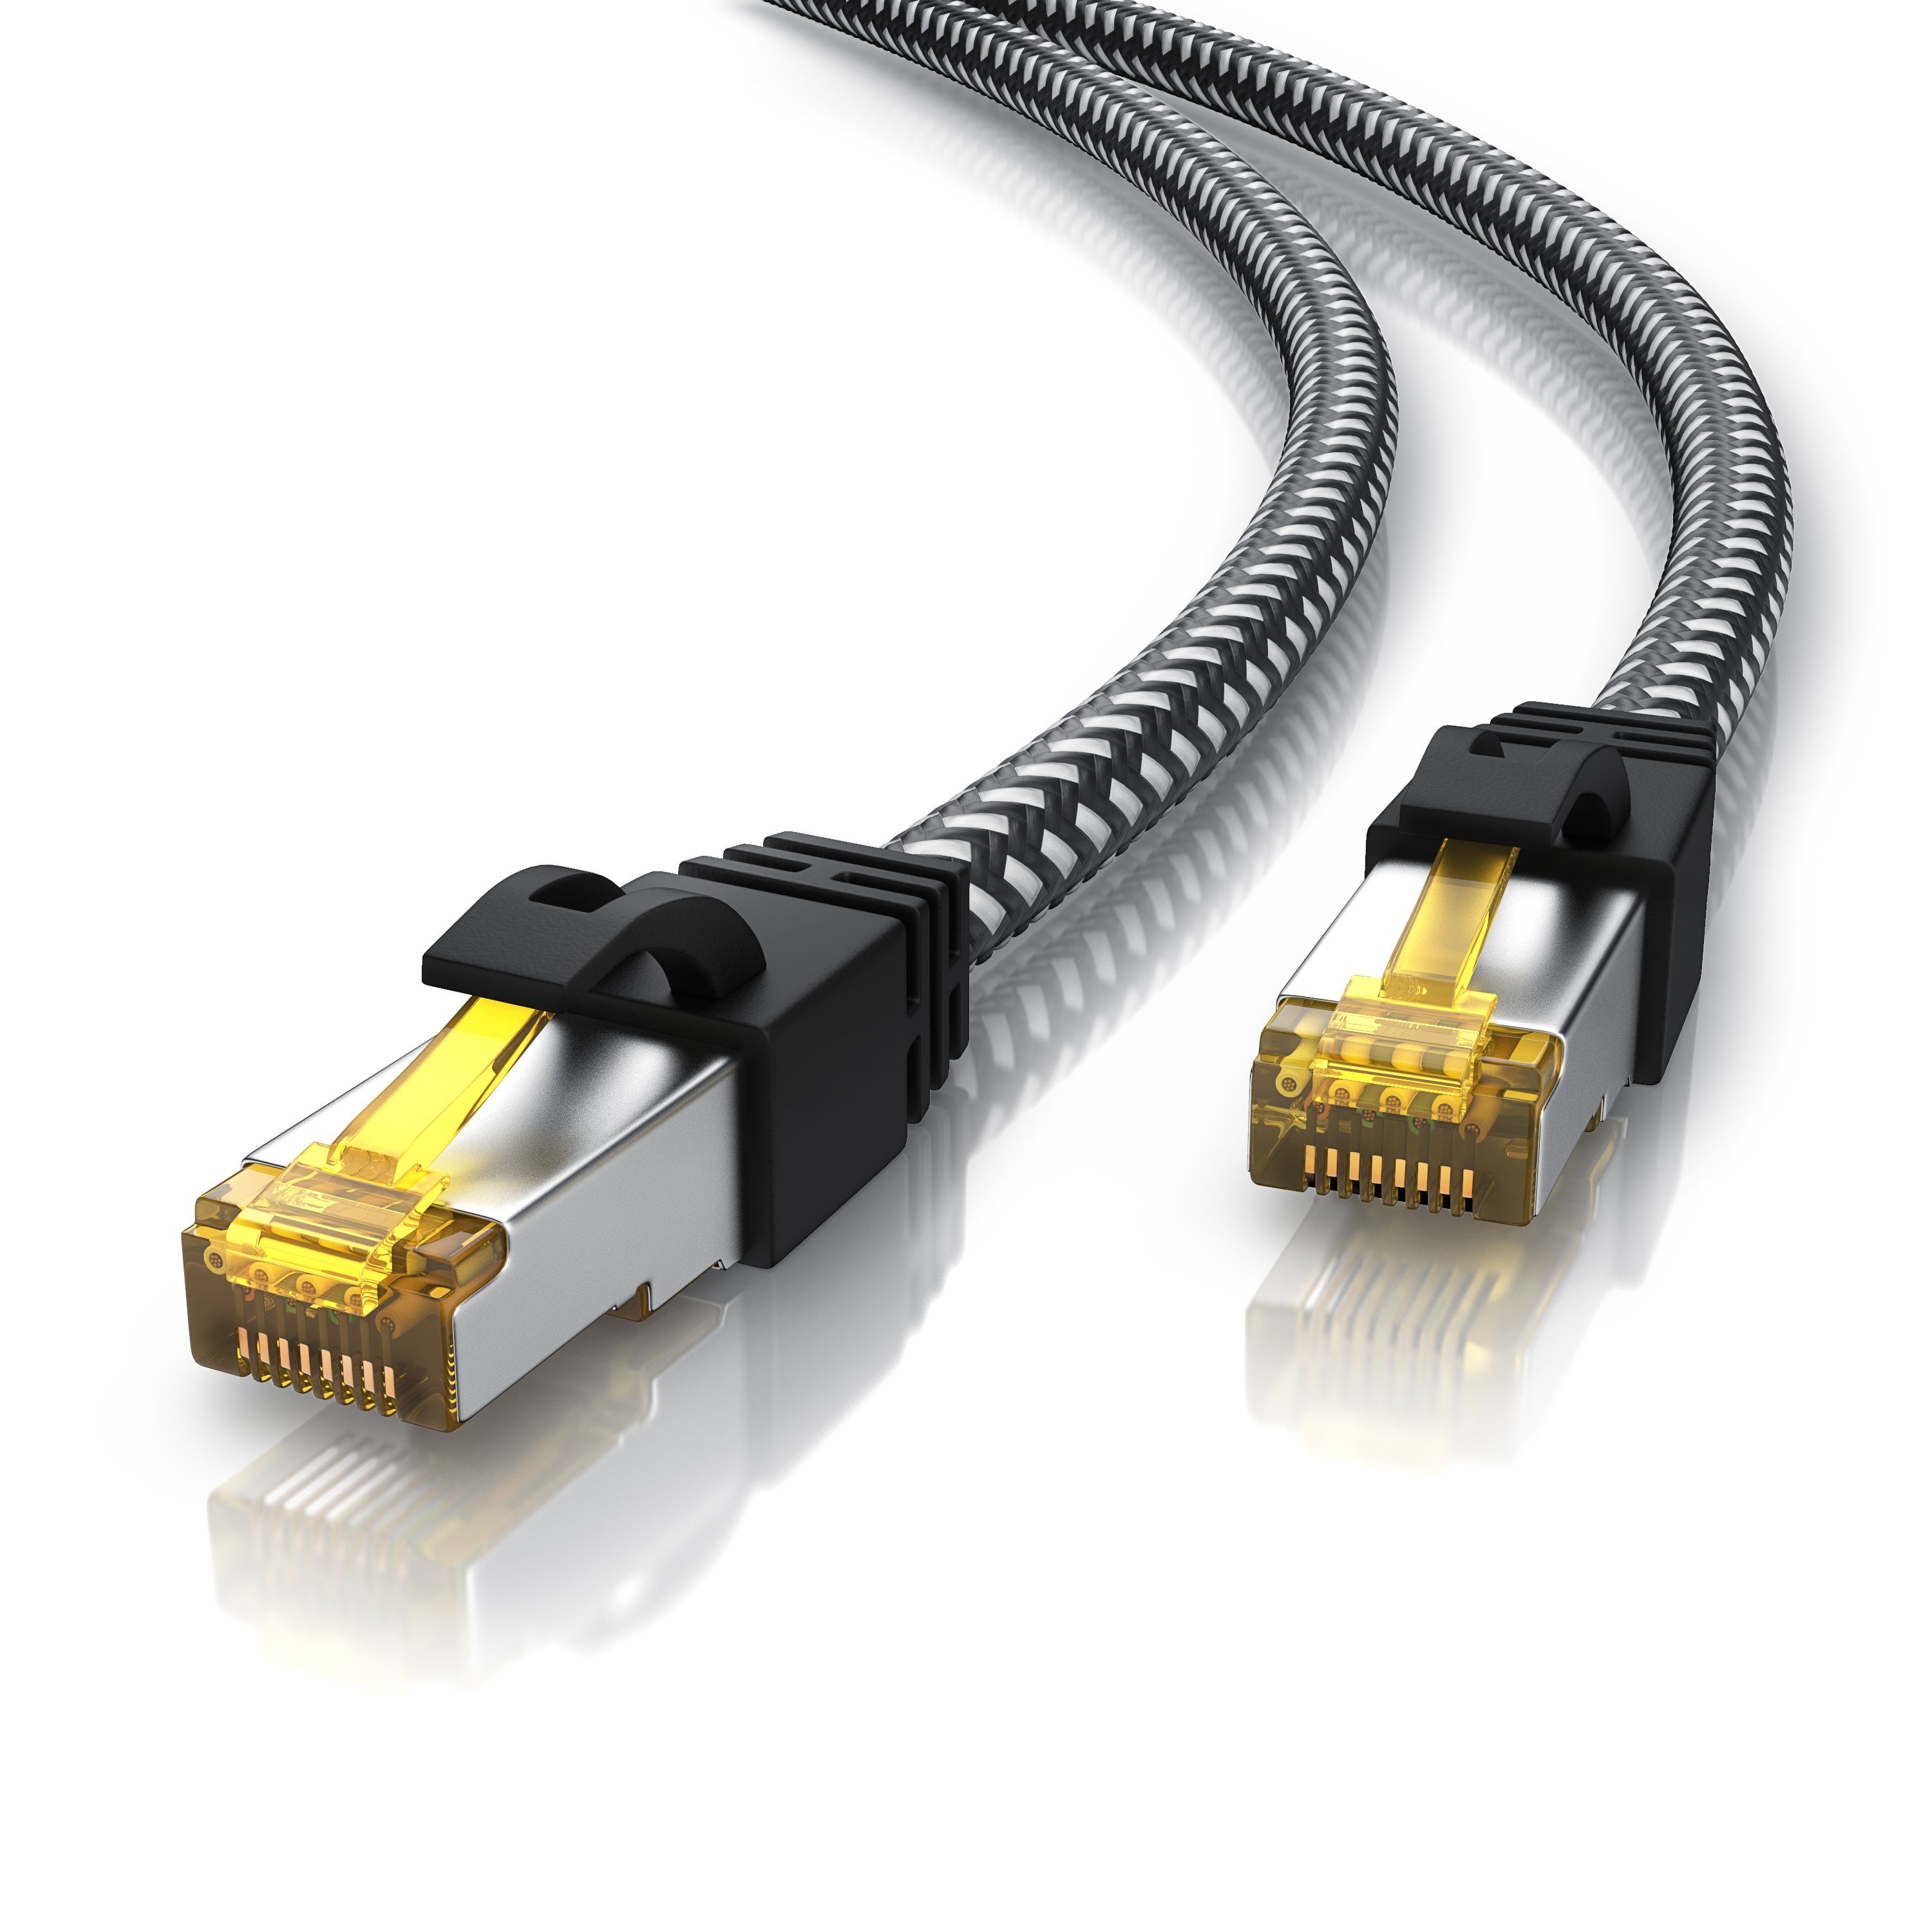 KabelDirekt LAN-Verlängerung & Ethernet-Verlängerungskabel 0,25 m RJ45-Kupplung/Stecker, verlängert Netzwerkkabel bei voller Geschwindigkeit – Cat 7, 10 Gbit/s, SF/FTP-Abschirmung, schwarz 